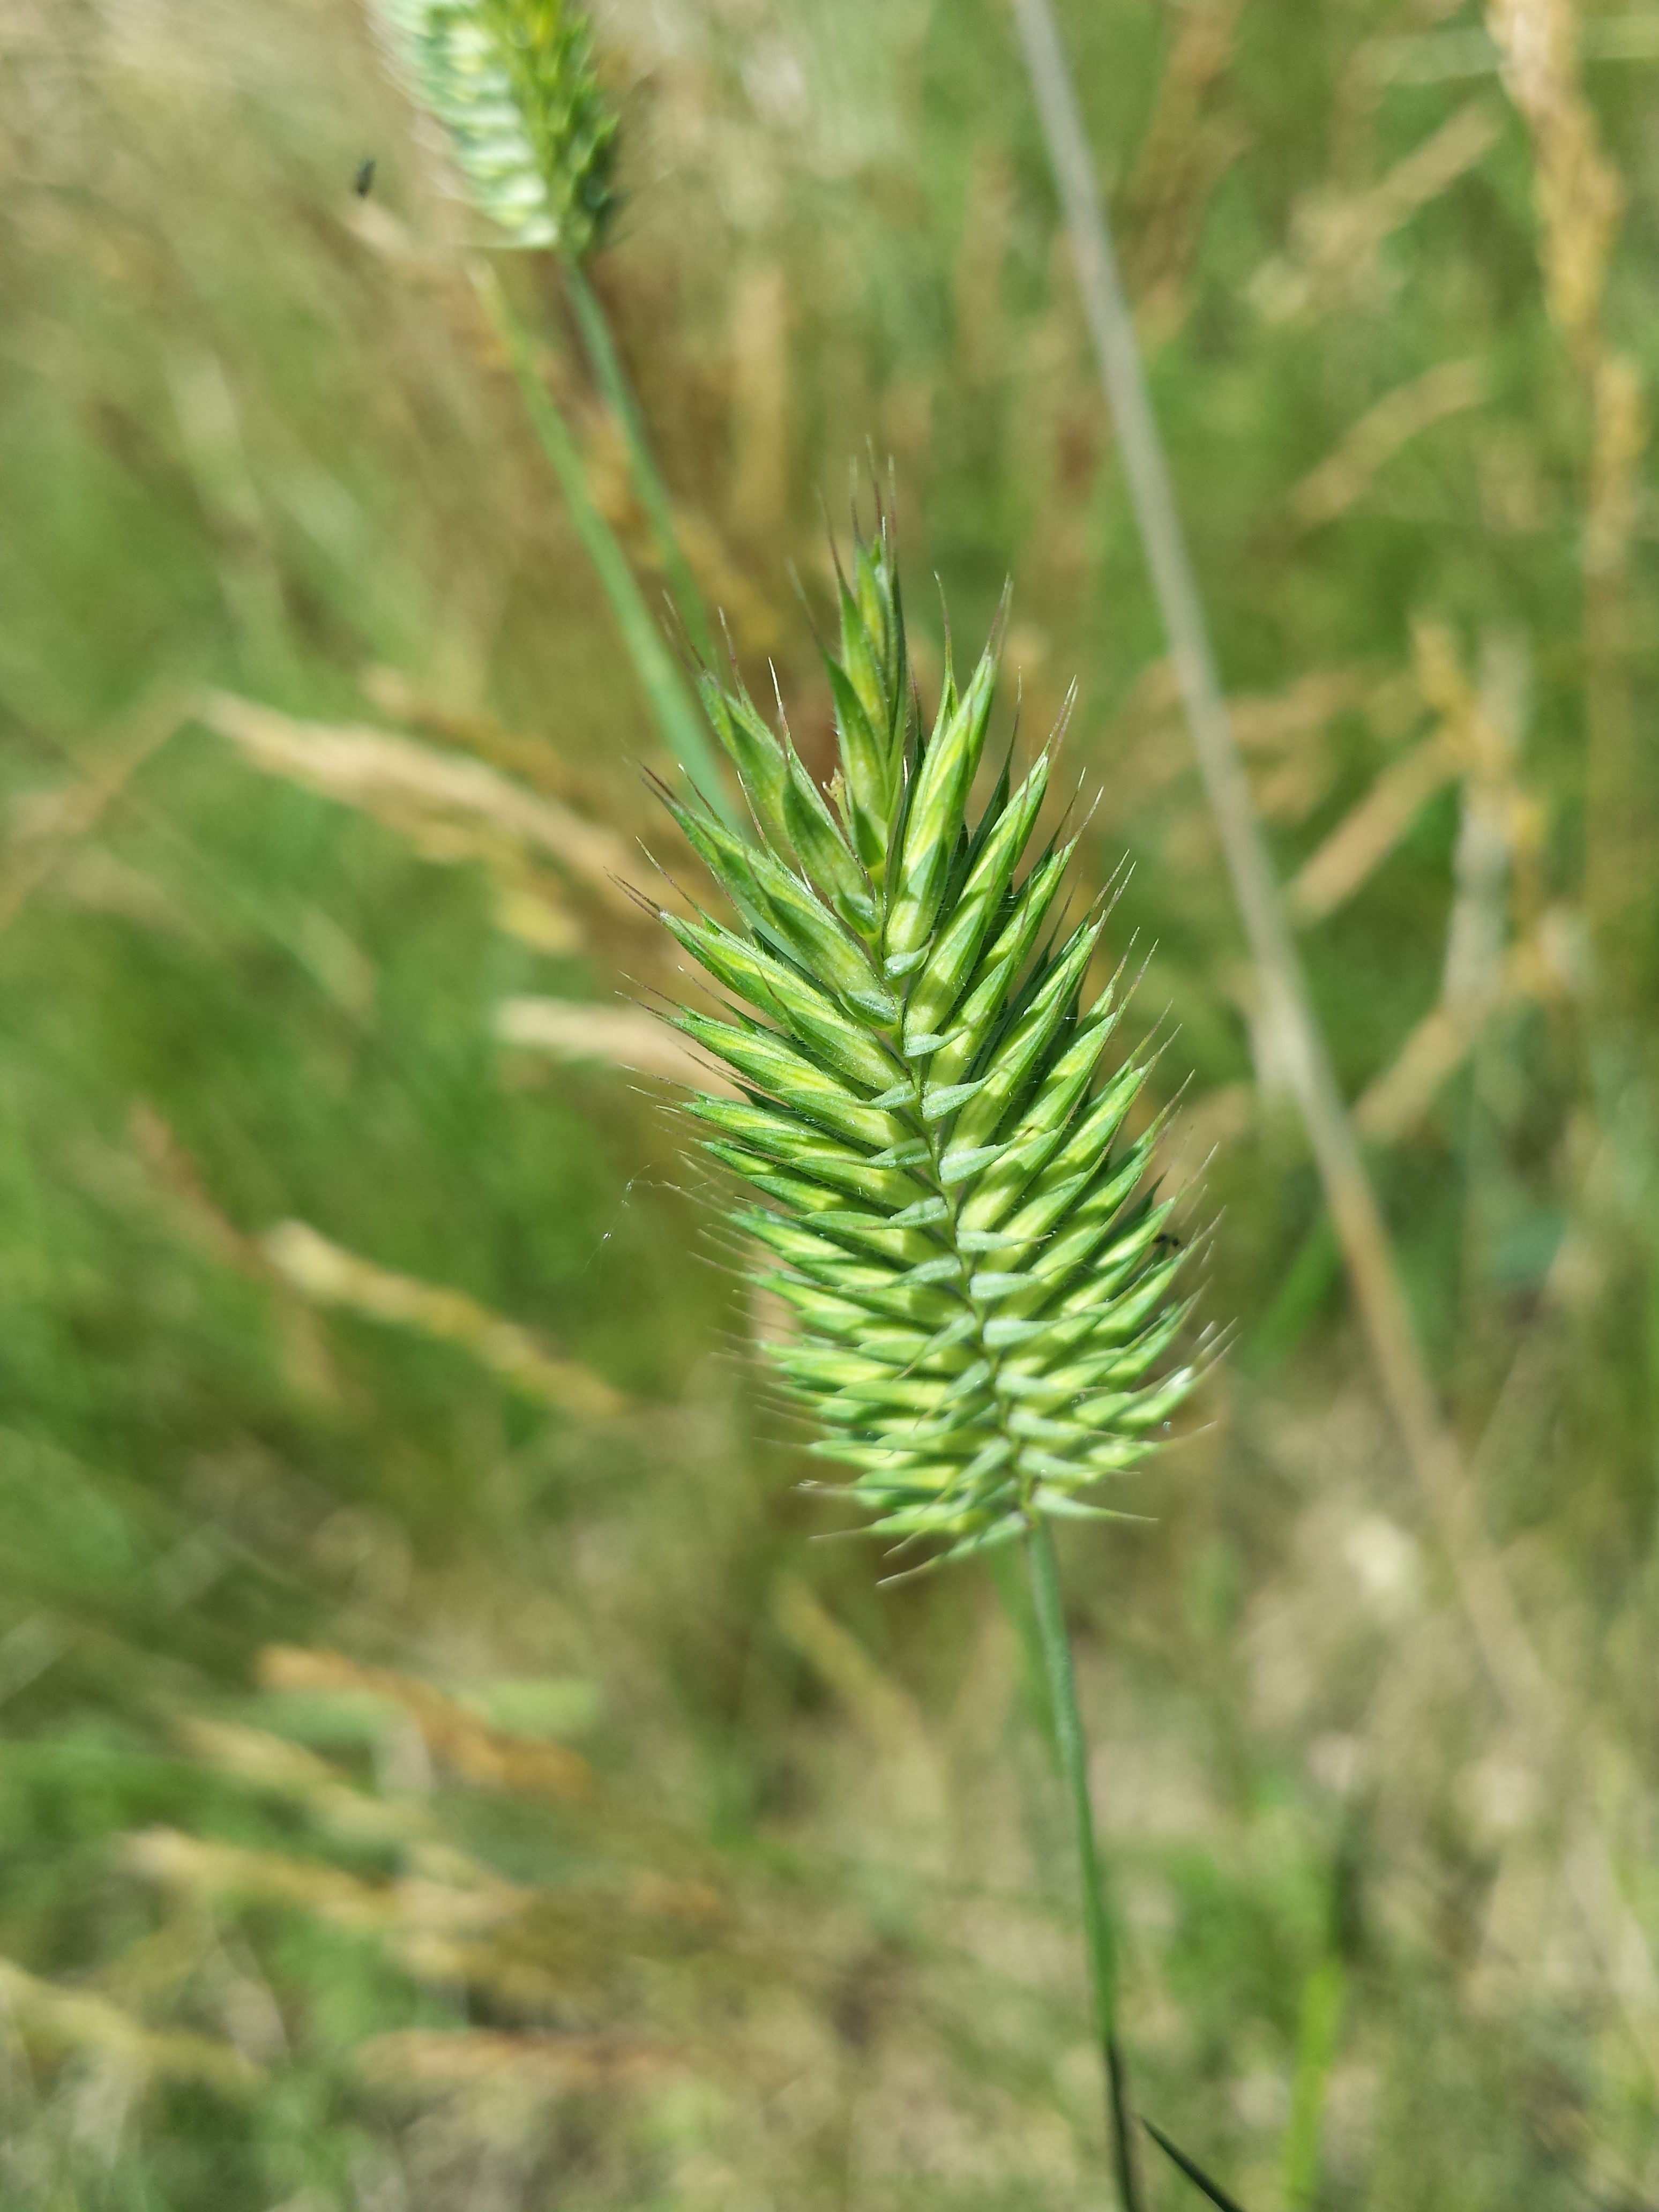 Seedhead with its distinctive, dense seed arrangement